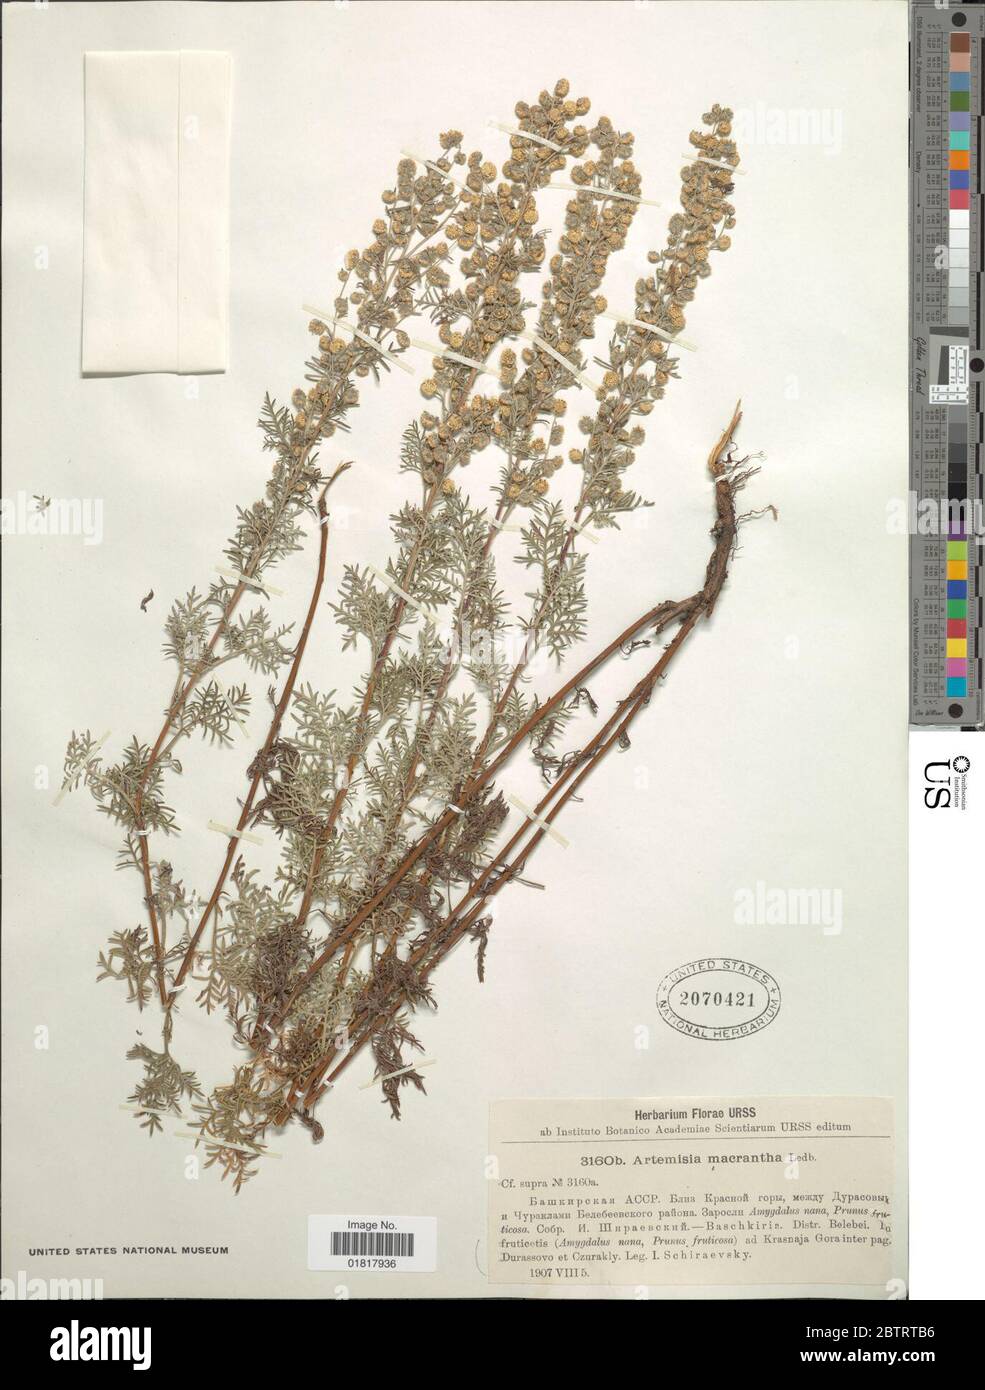 Artemisia macrantha Ledeb. Stock Photo